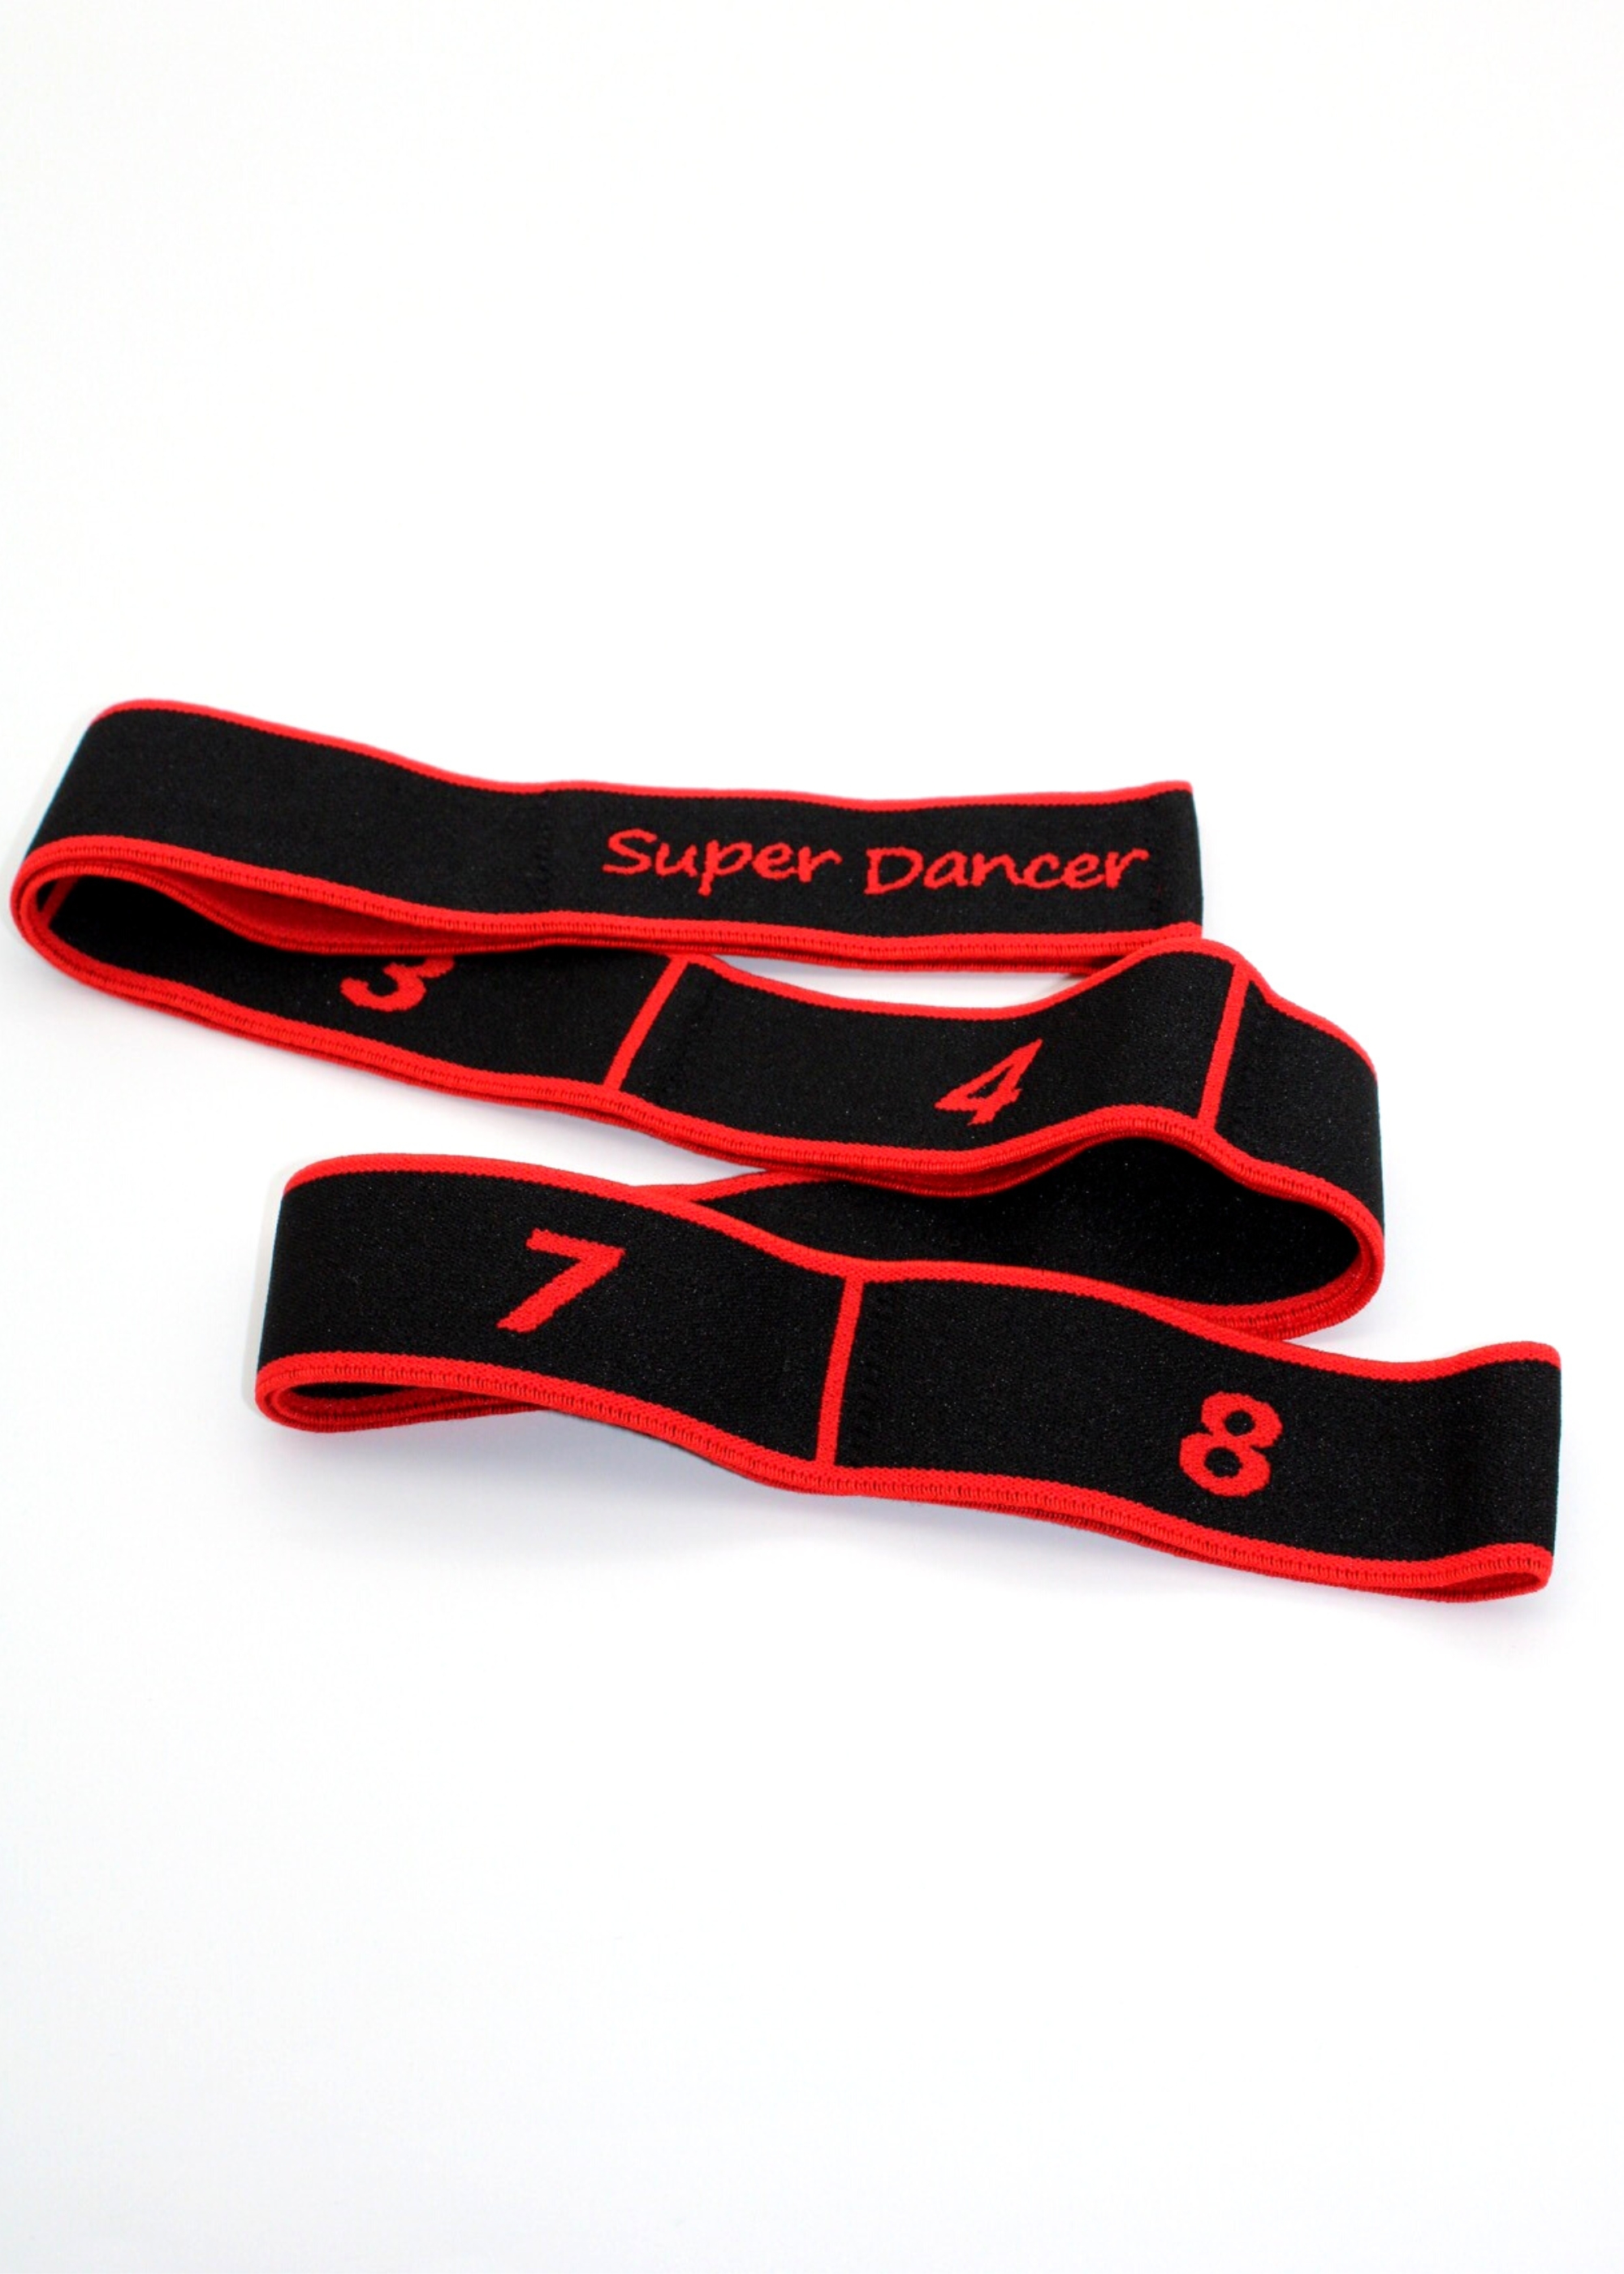 Flexistretcher 8 stitches Super Dance